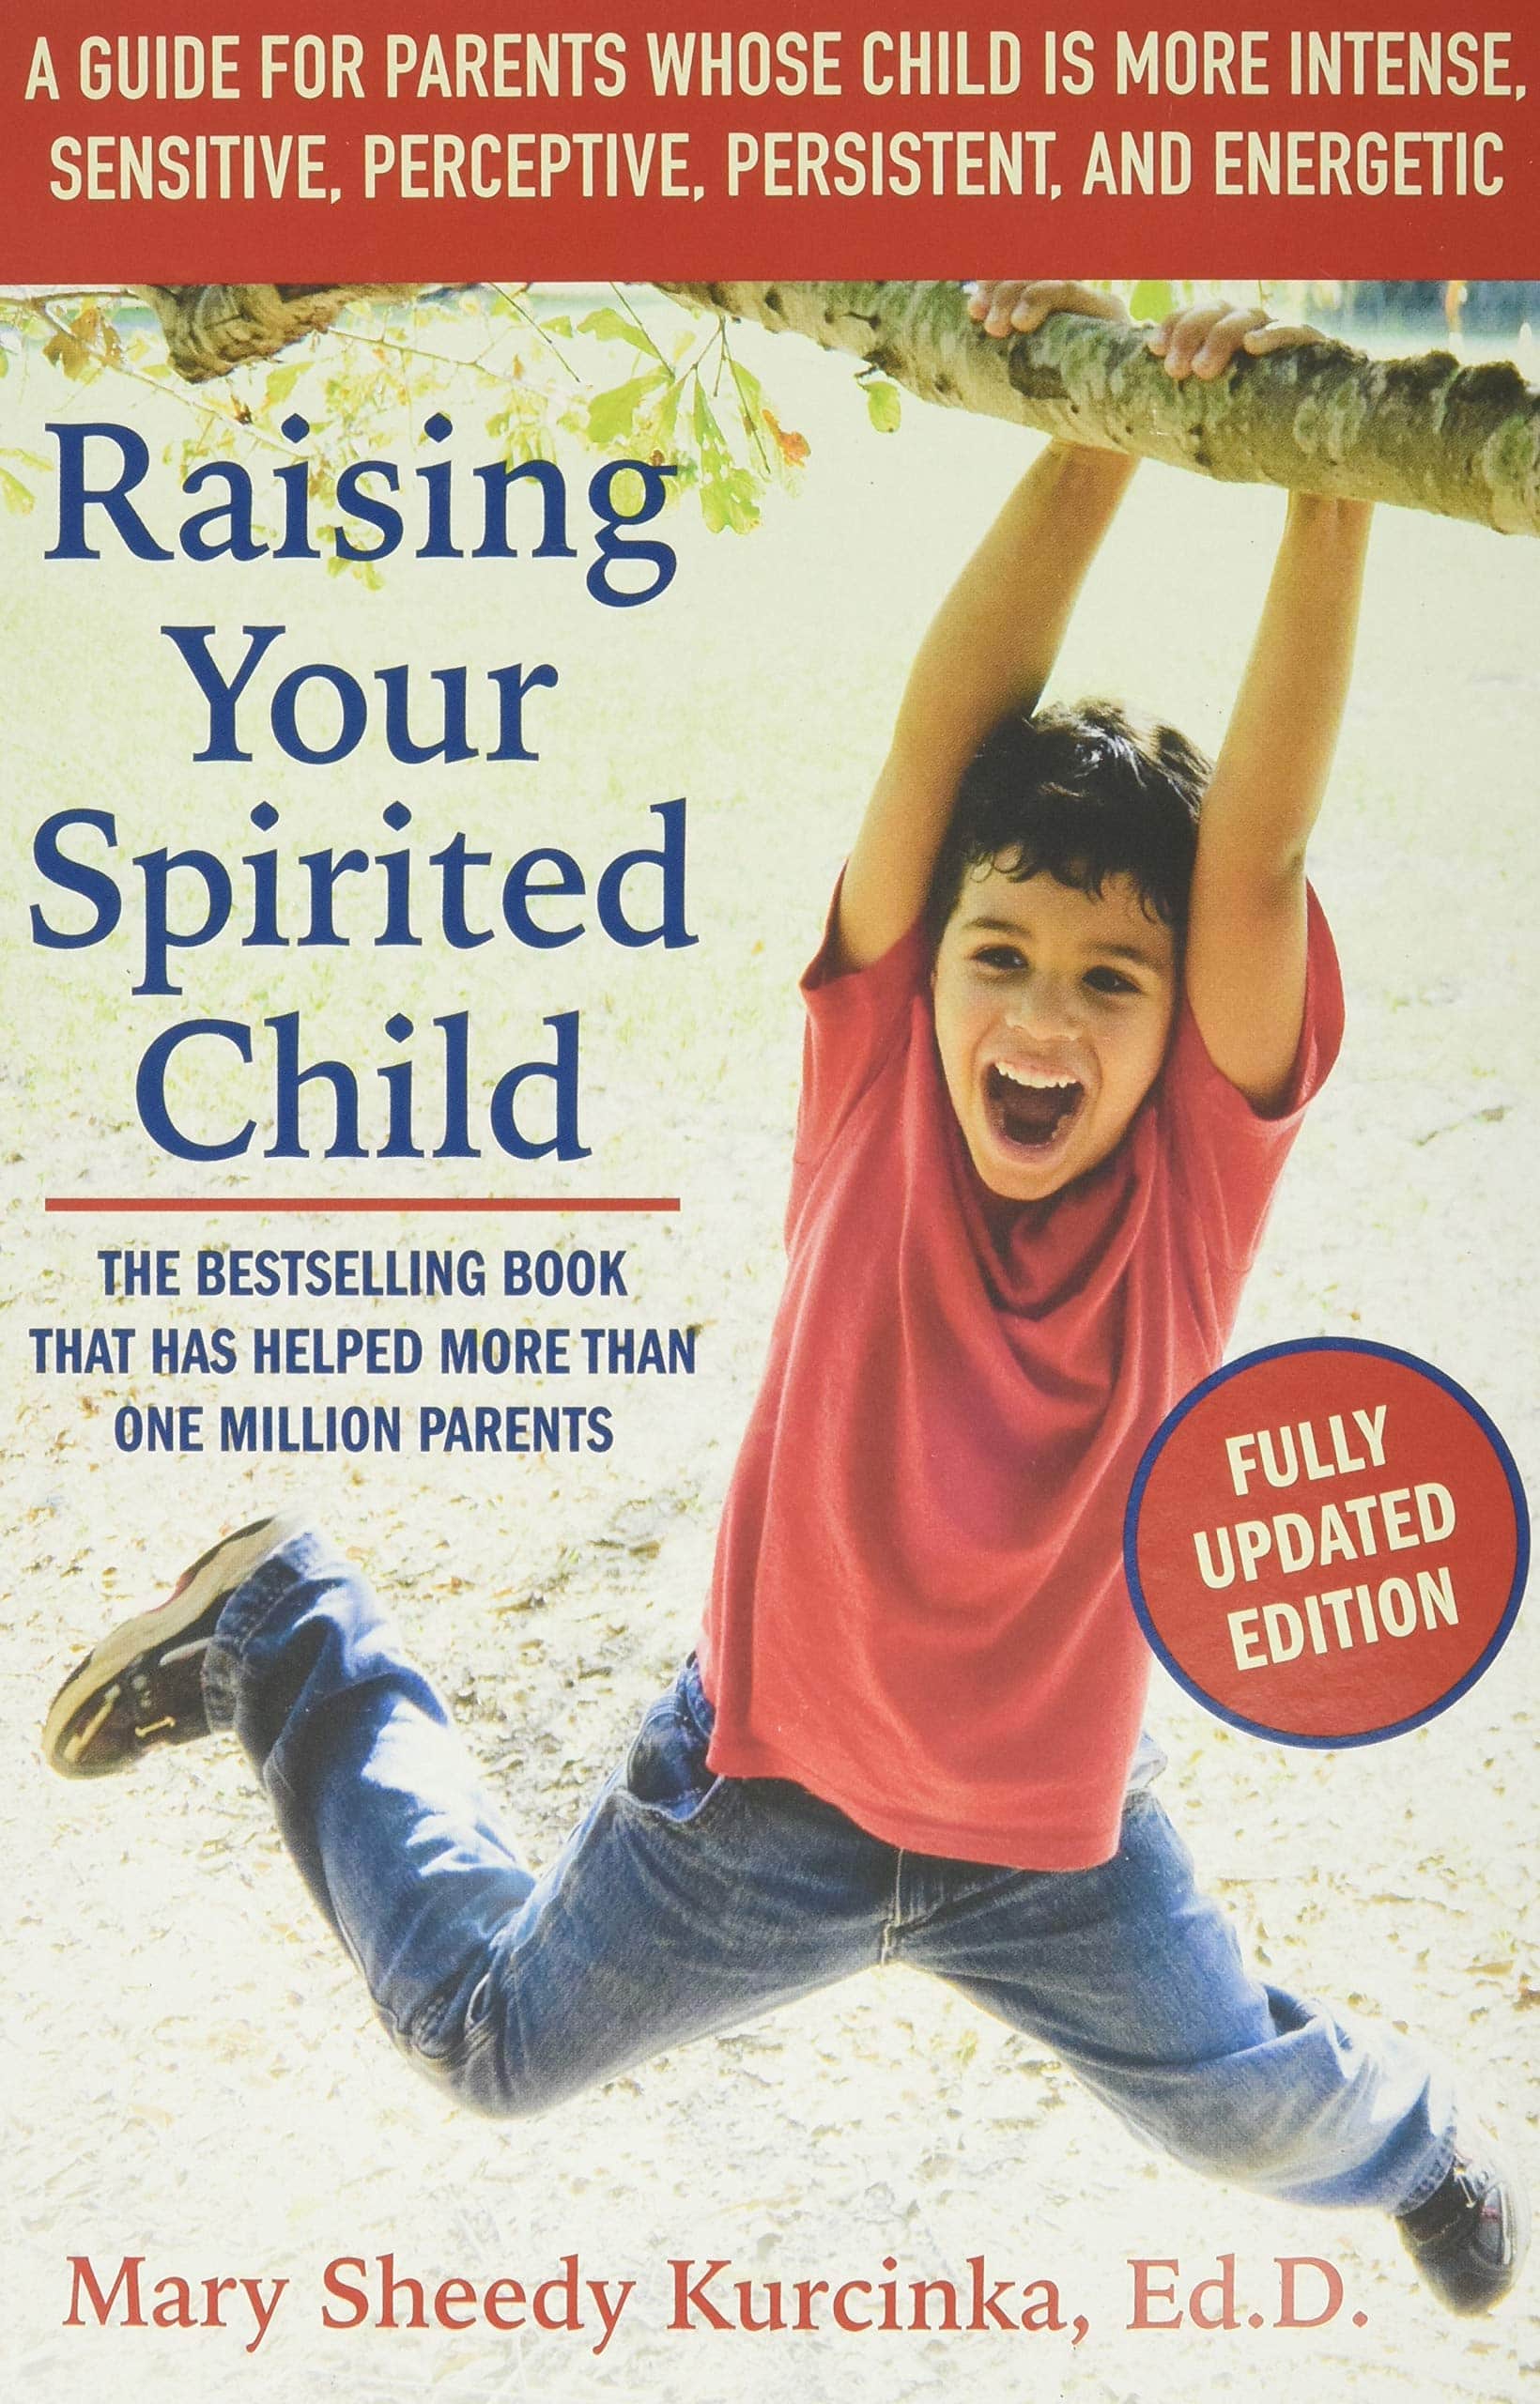 "Raising Your Spirited Child" by Mary Sheedy Kurcinka, Ed.D.